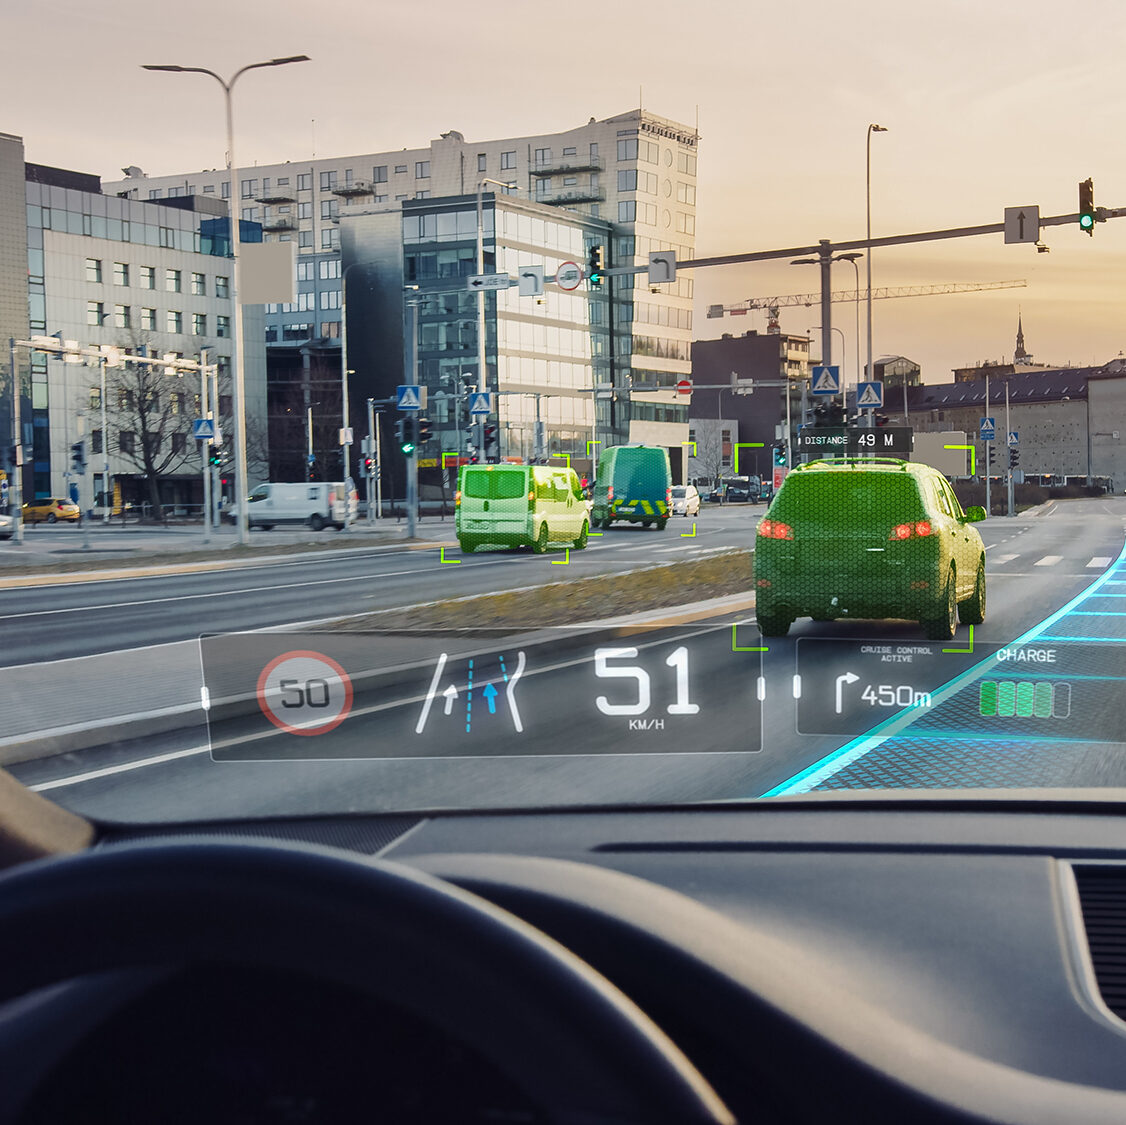 Futuristic Autonomous Self-Driving Car Moving Through City, Head